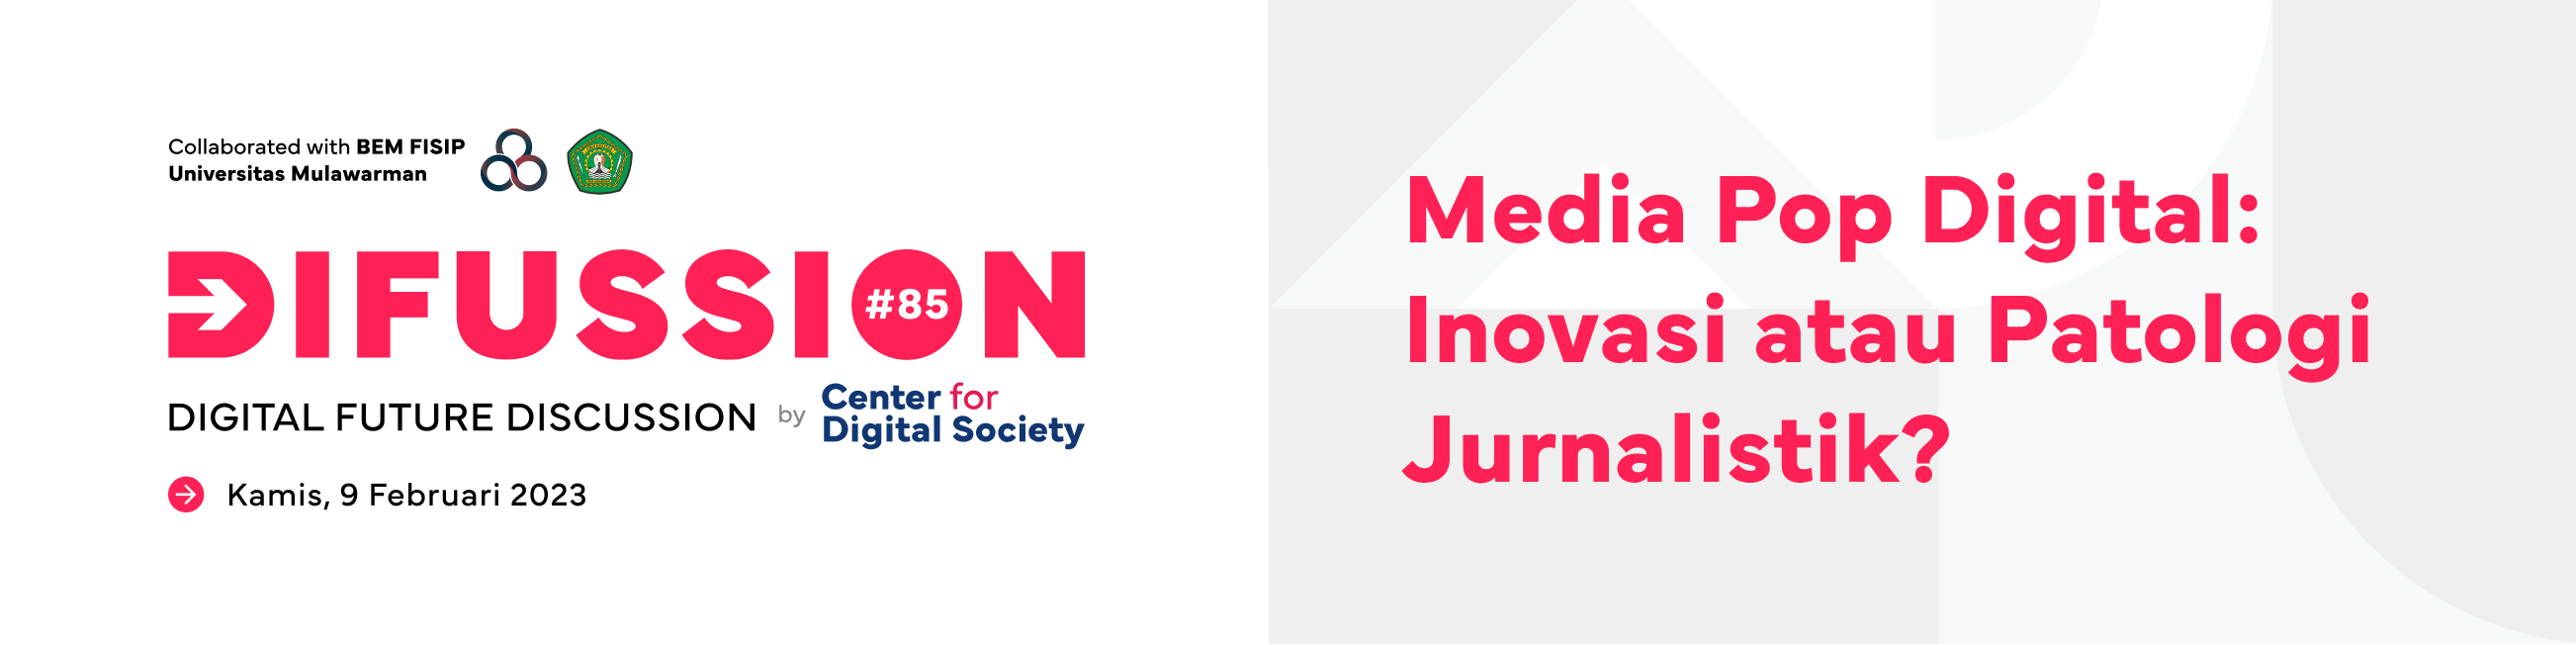 [Press Release] Media Pop Digital: Inovasi atau Patologi Jurnalistik? | Difussion #85